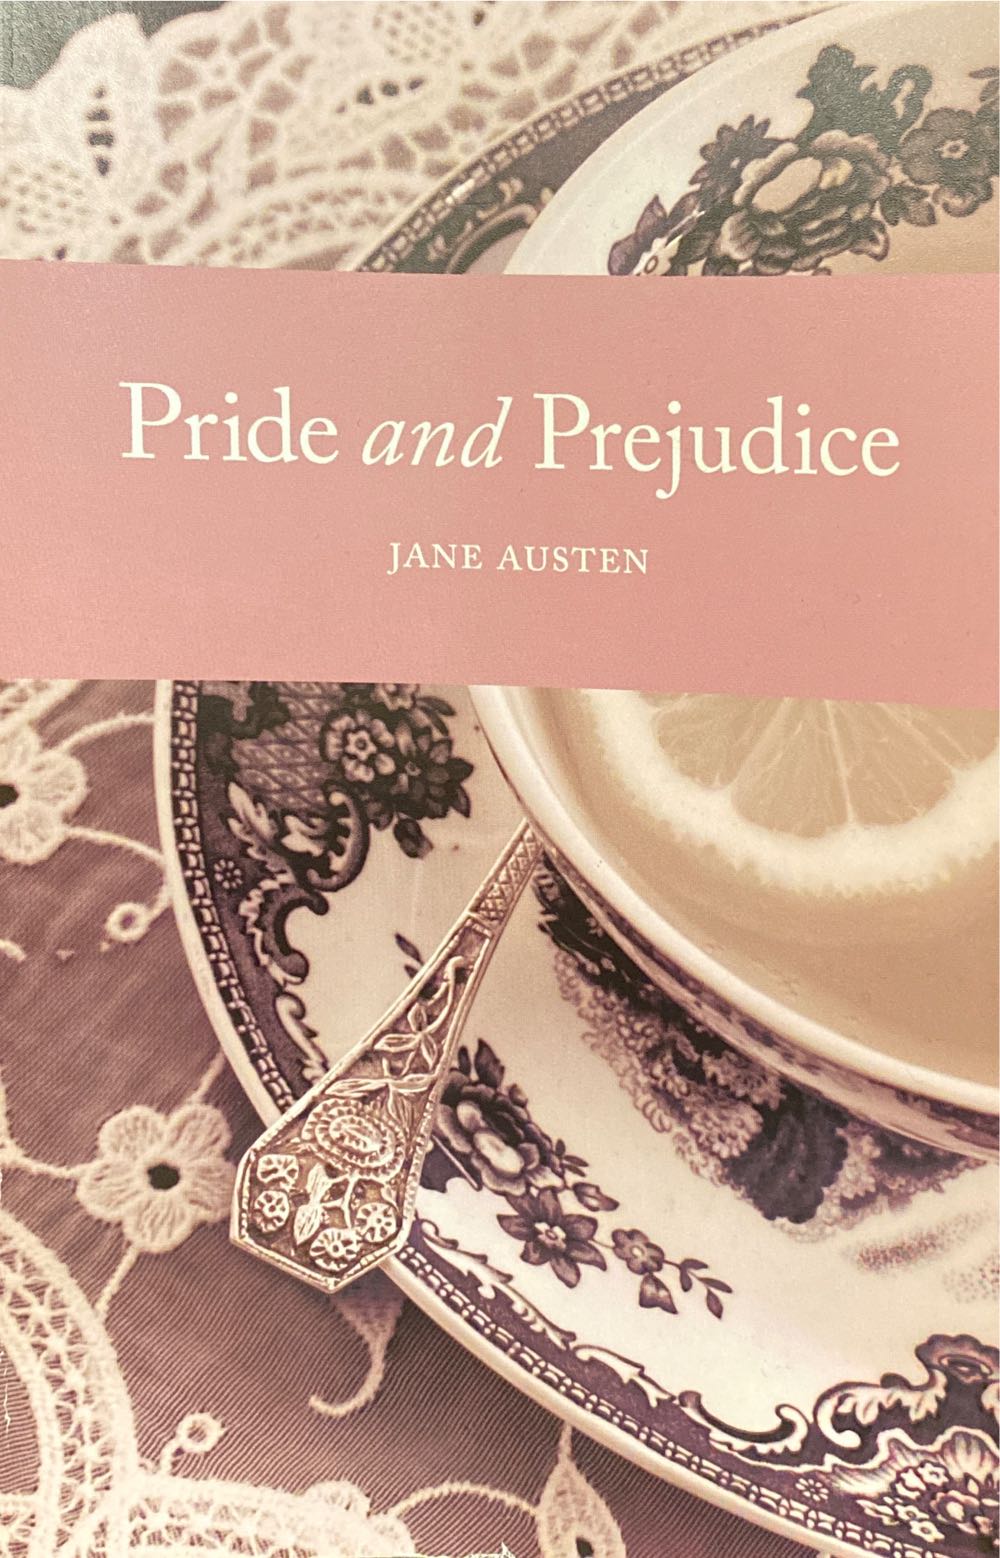 Pride and Prejudice - Jane Austen book collectible [Barcode 9787814531685] - Main Image 1